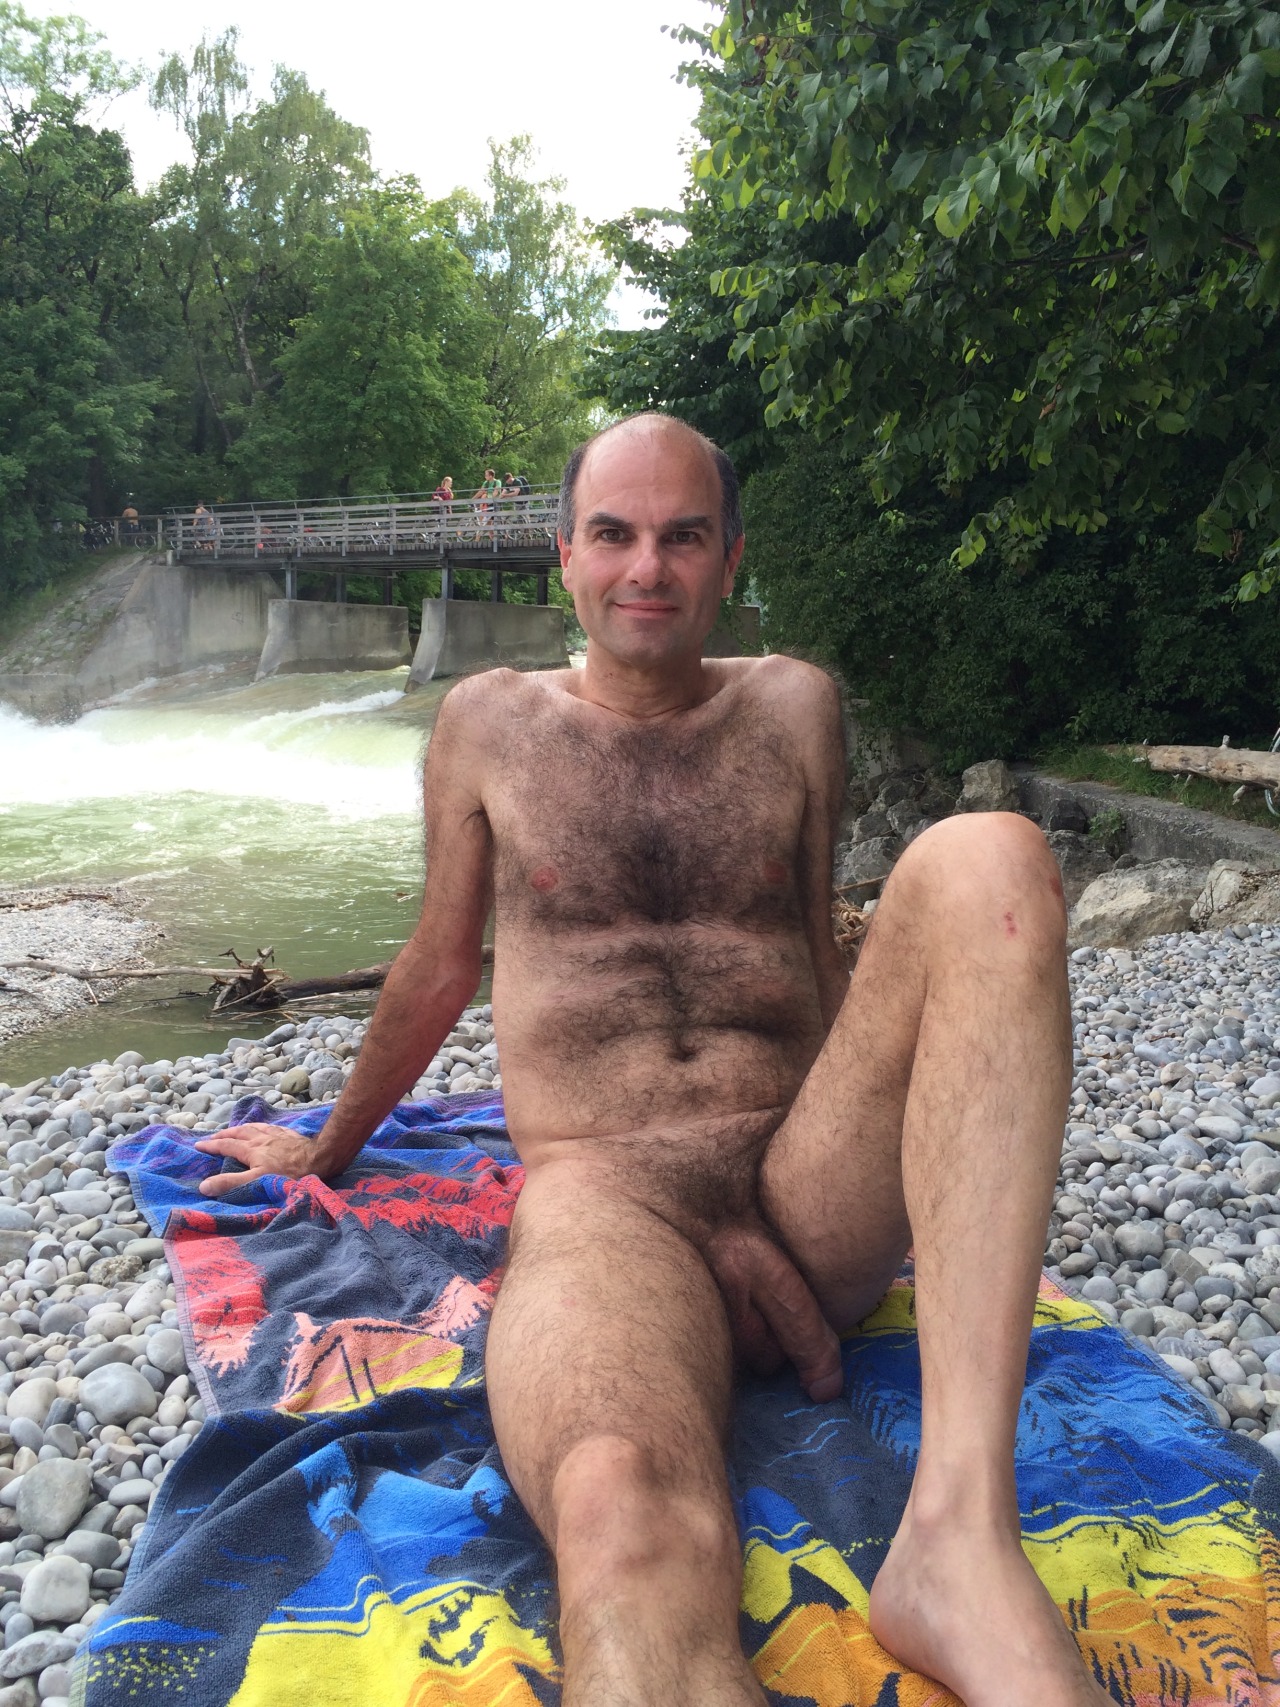 naked-males:
â€œ vienude:
â€œHot hairy daddy at the nude beach
â€
nudists-and-exhibitionists | exhibitionisten-exhibitionists | nude-gays-and-guys
male-nudists-and-naturists | male-nudists | men-nude | nackte-kerle | men-posted
guys-posted | guys-nude |...